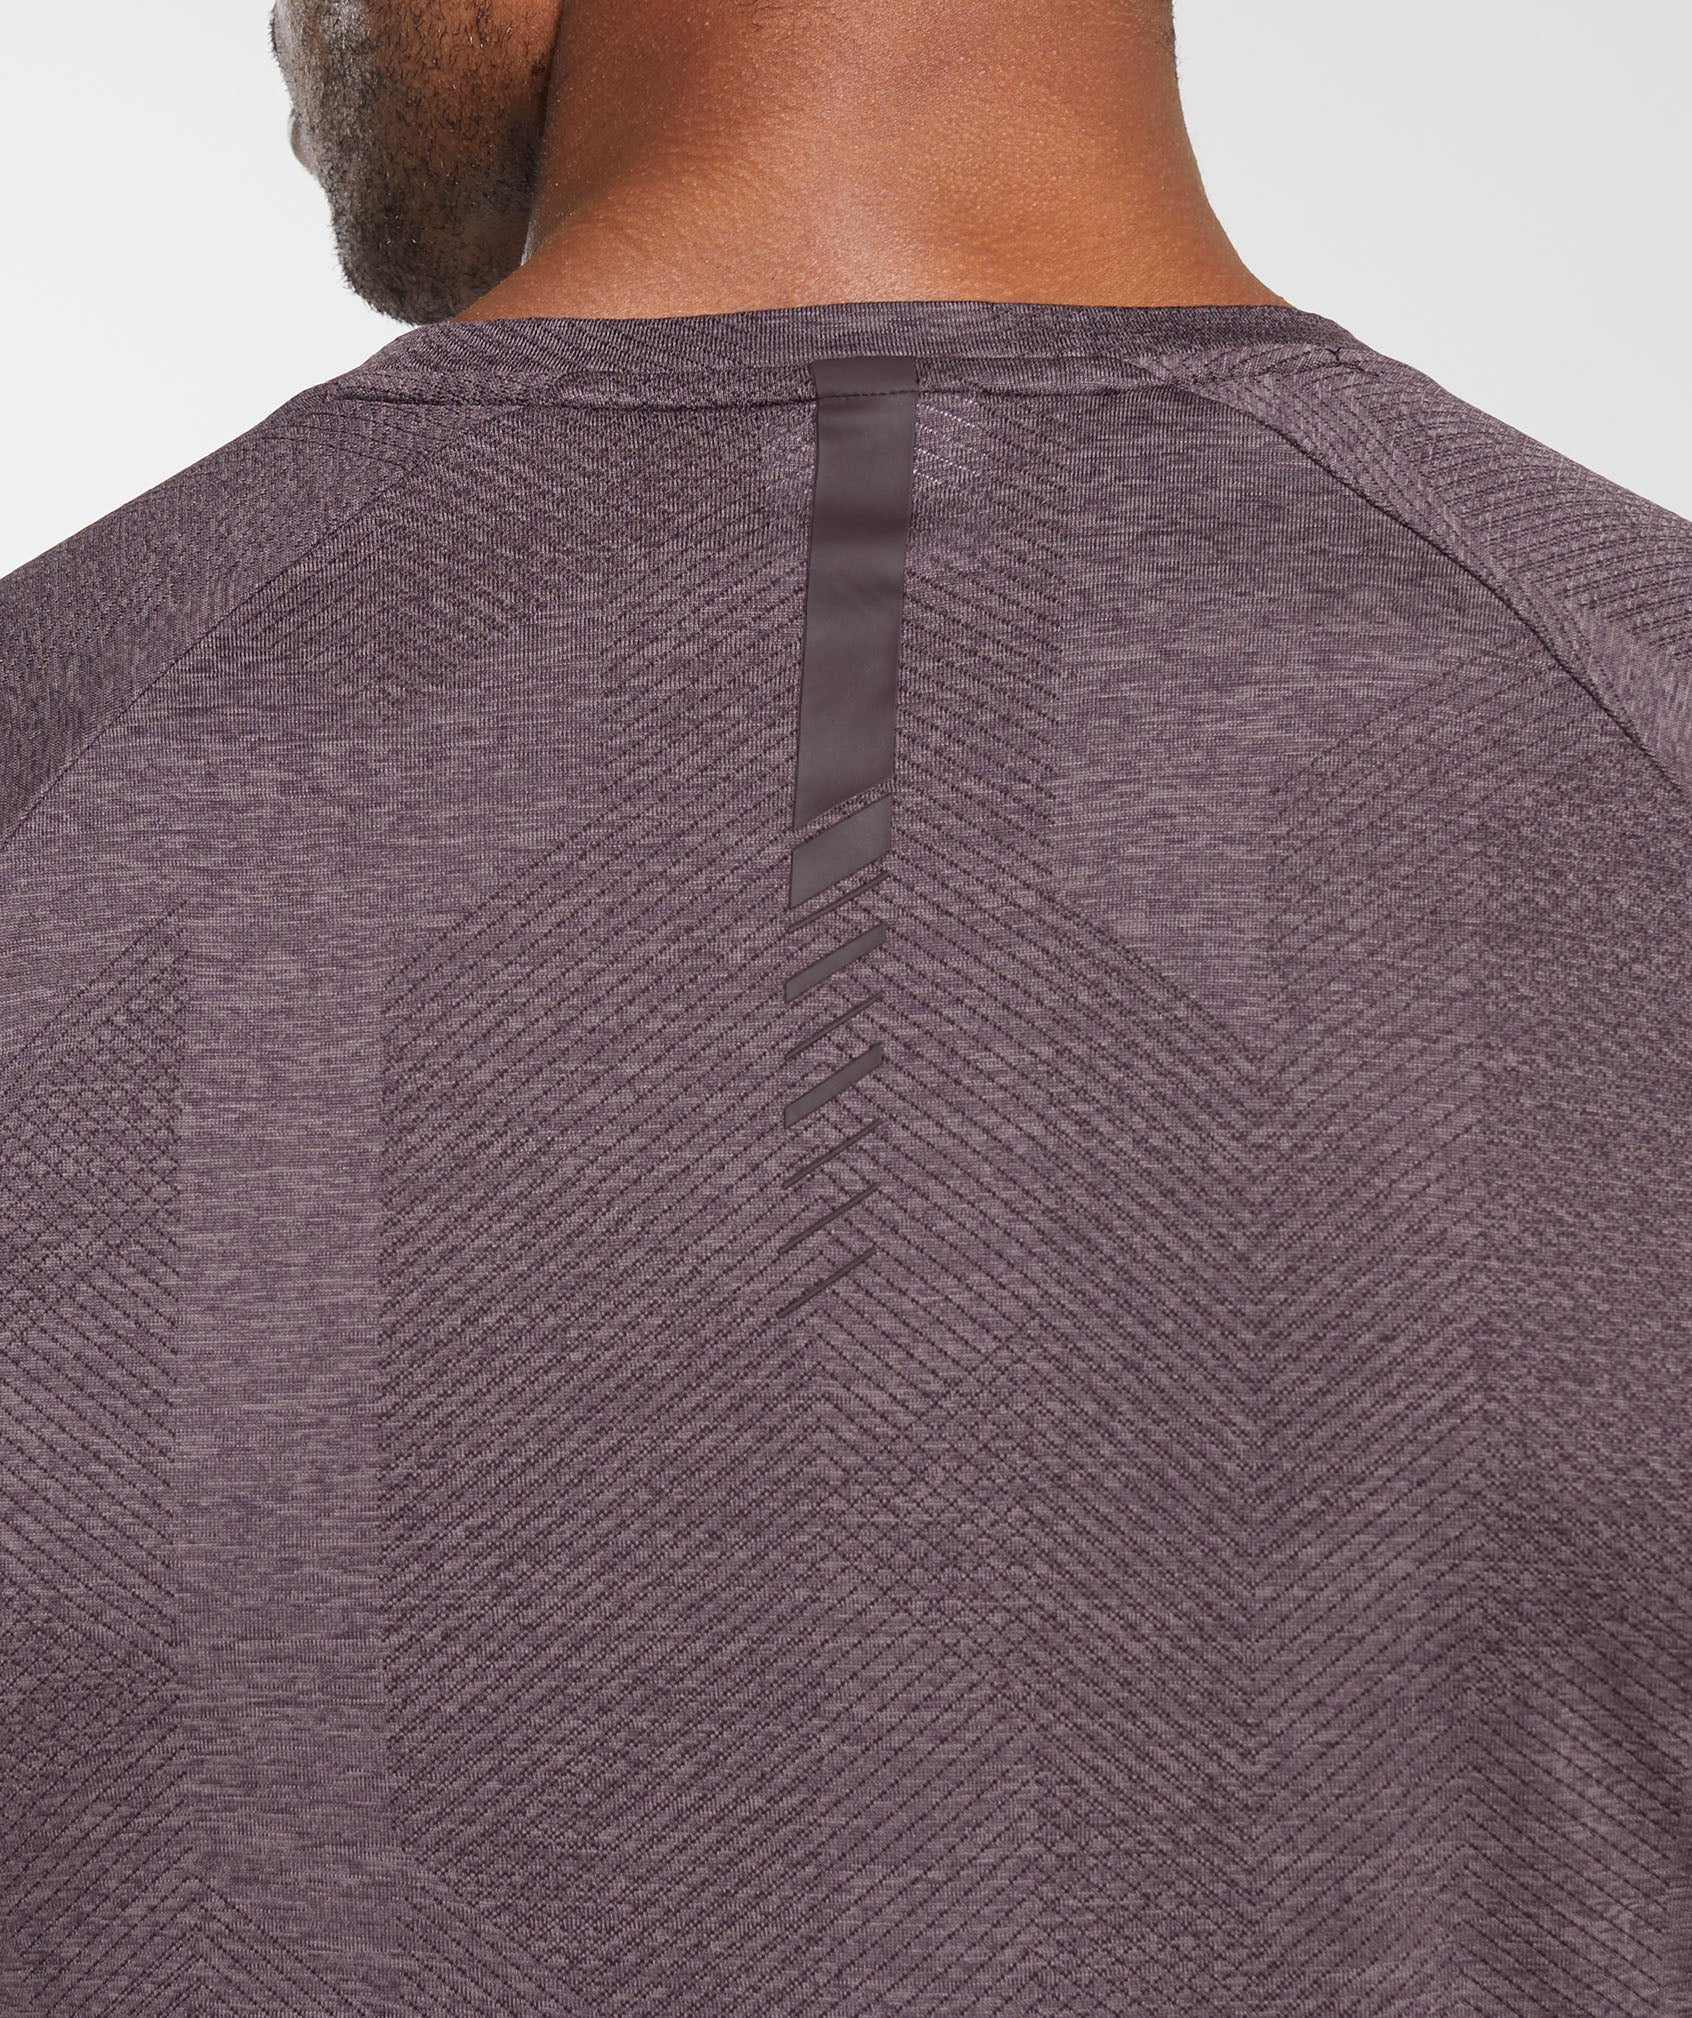 Apex Long Sleeve T-Shirt in Plum Brown/Walnut Mauve - view 6